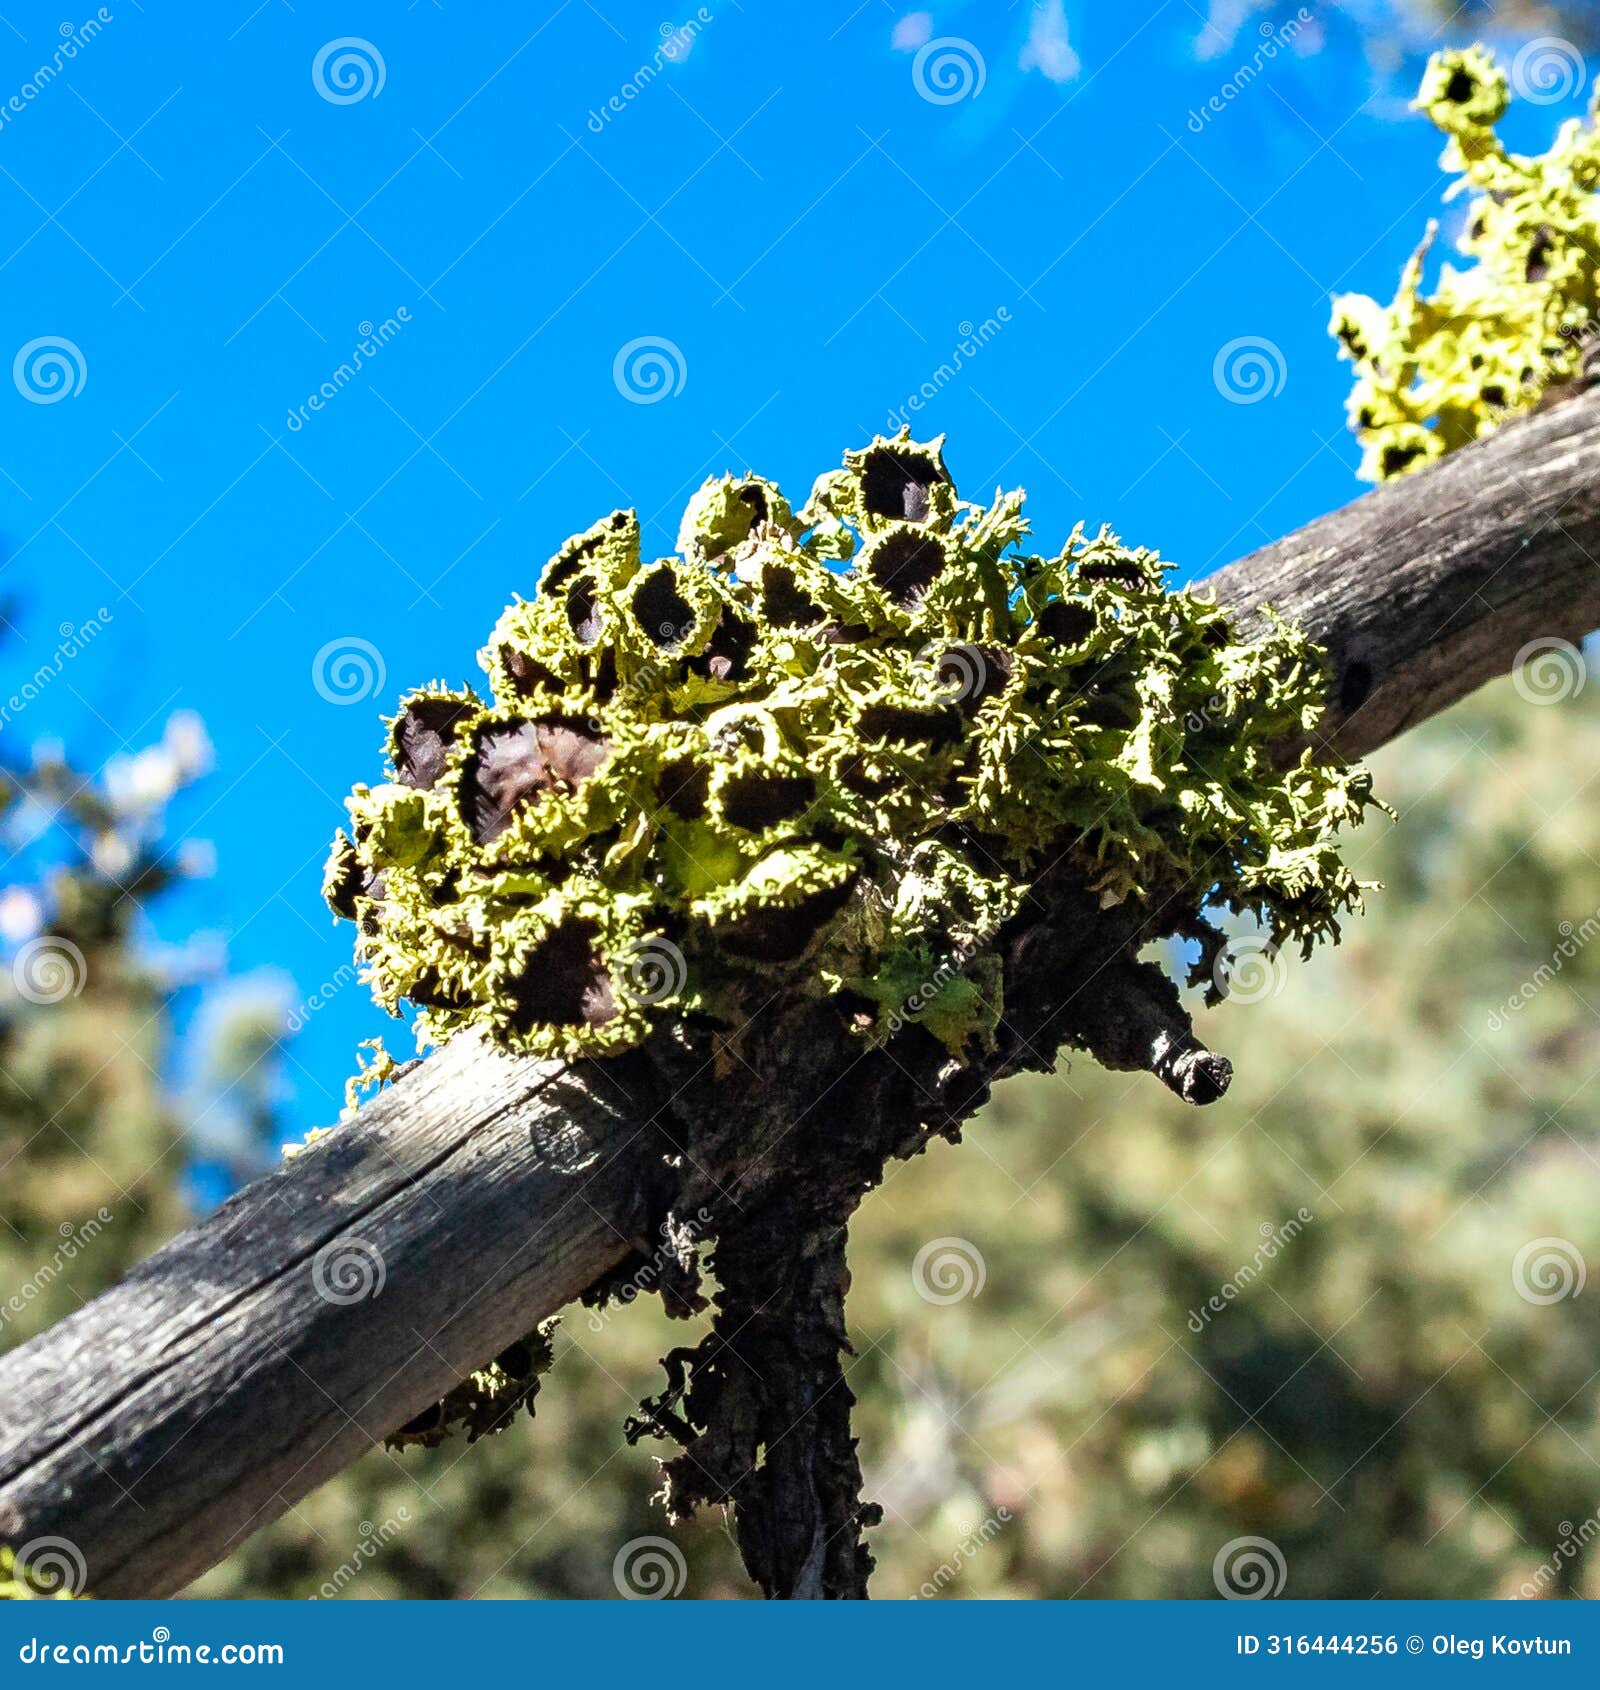 lichens on tree branches in sierra nevada, california, usa